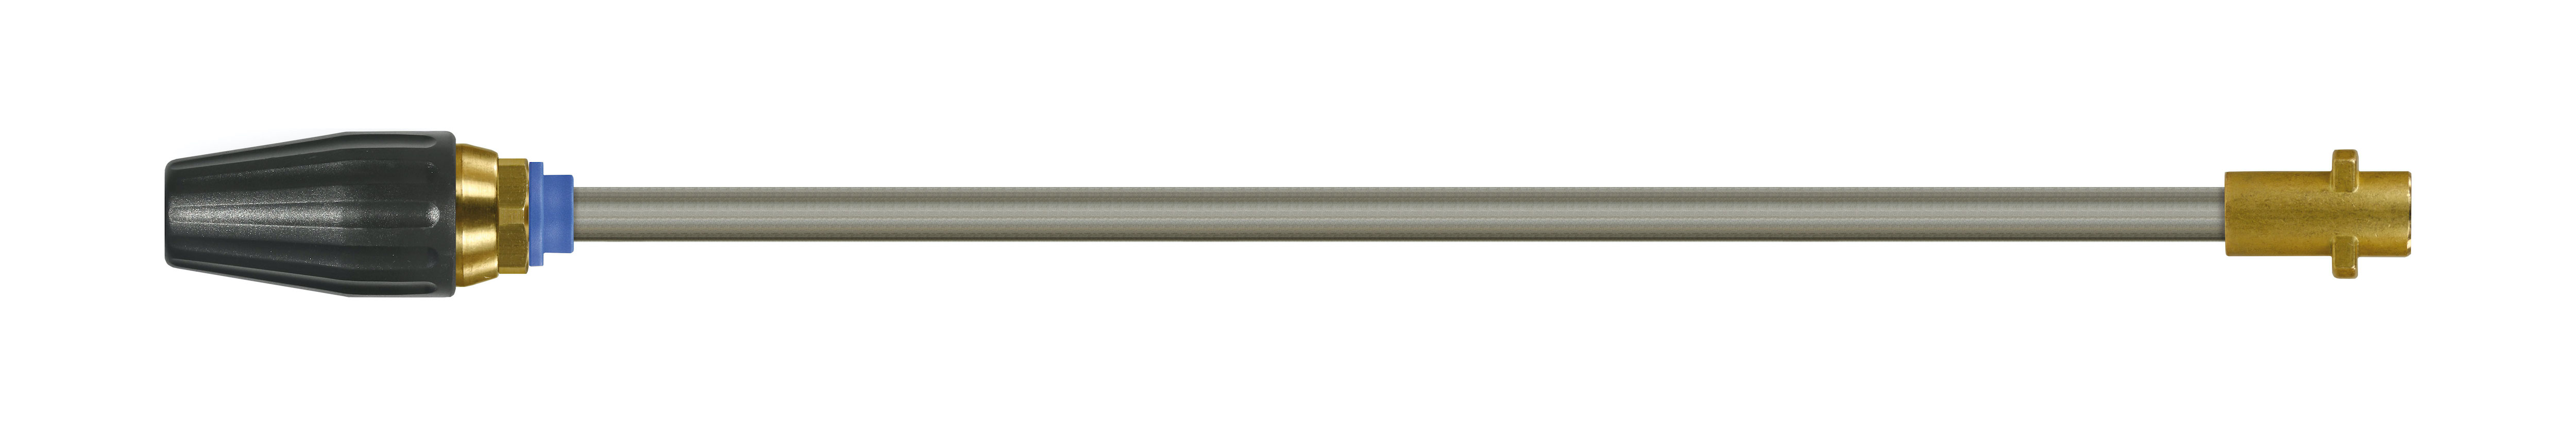 Rotabuse céramique avec lance 430mm, 100-250 bar, Calibre 040.